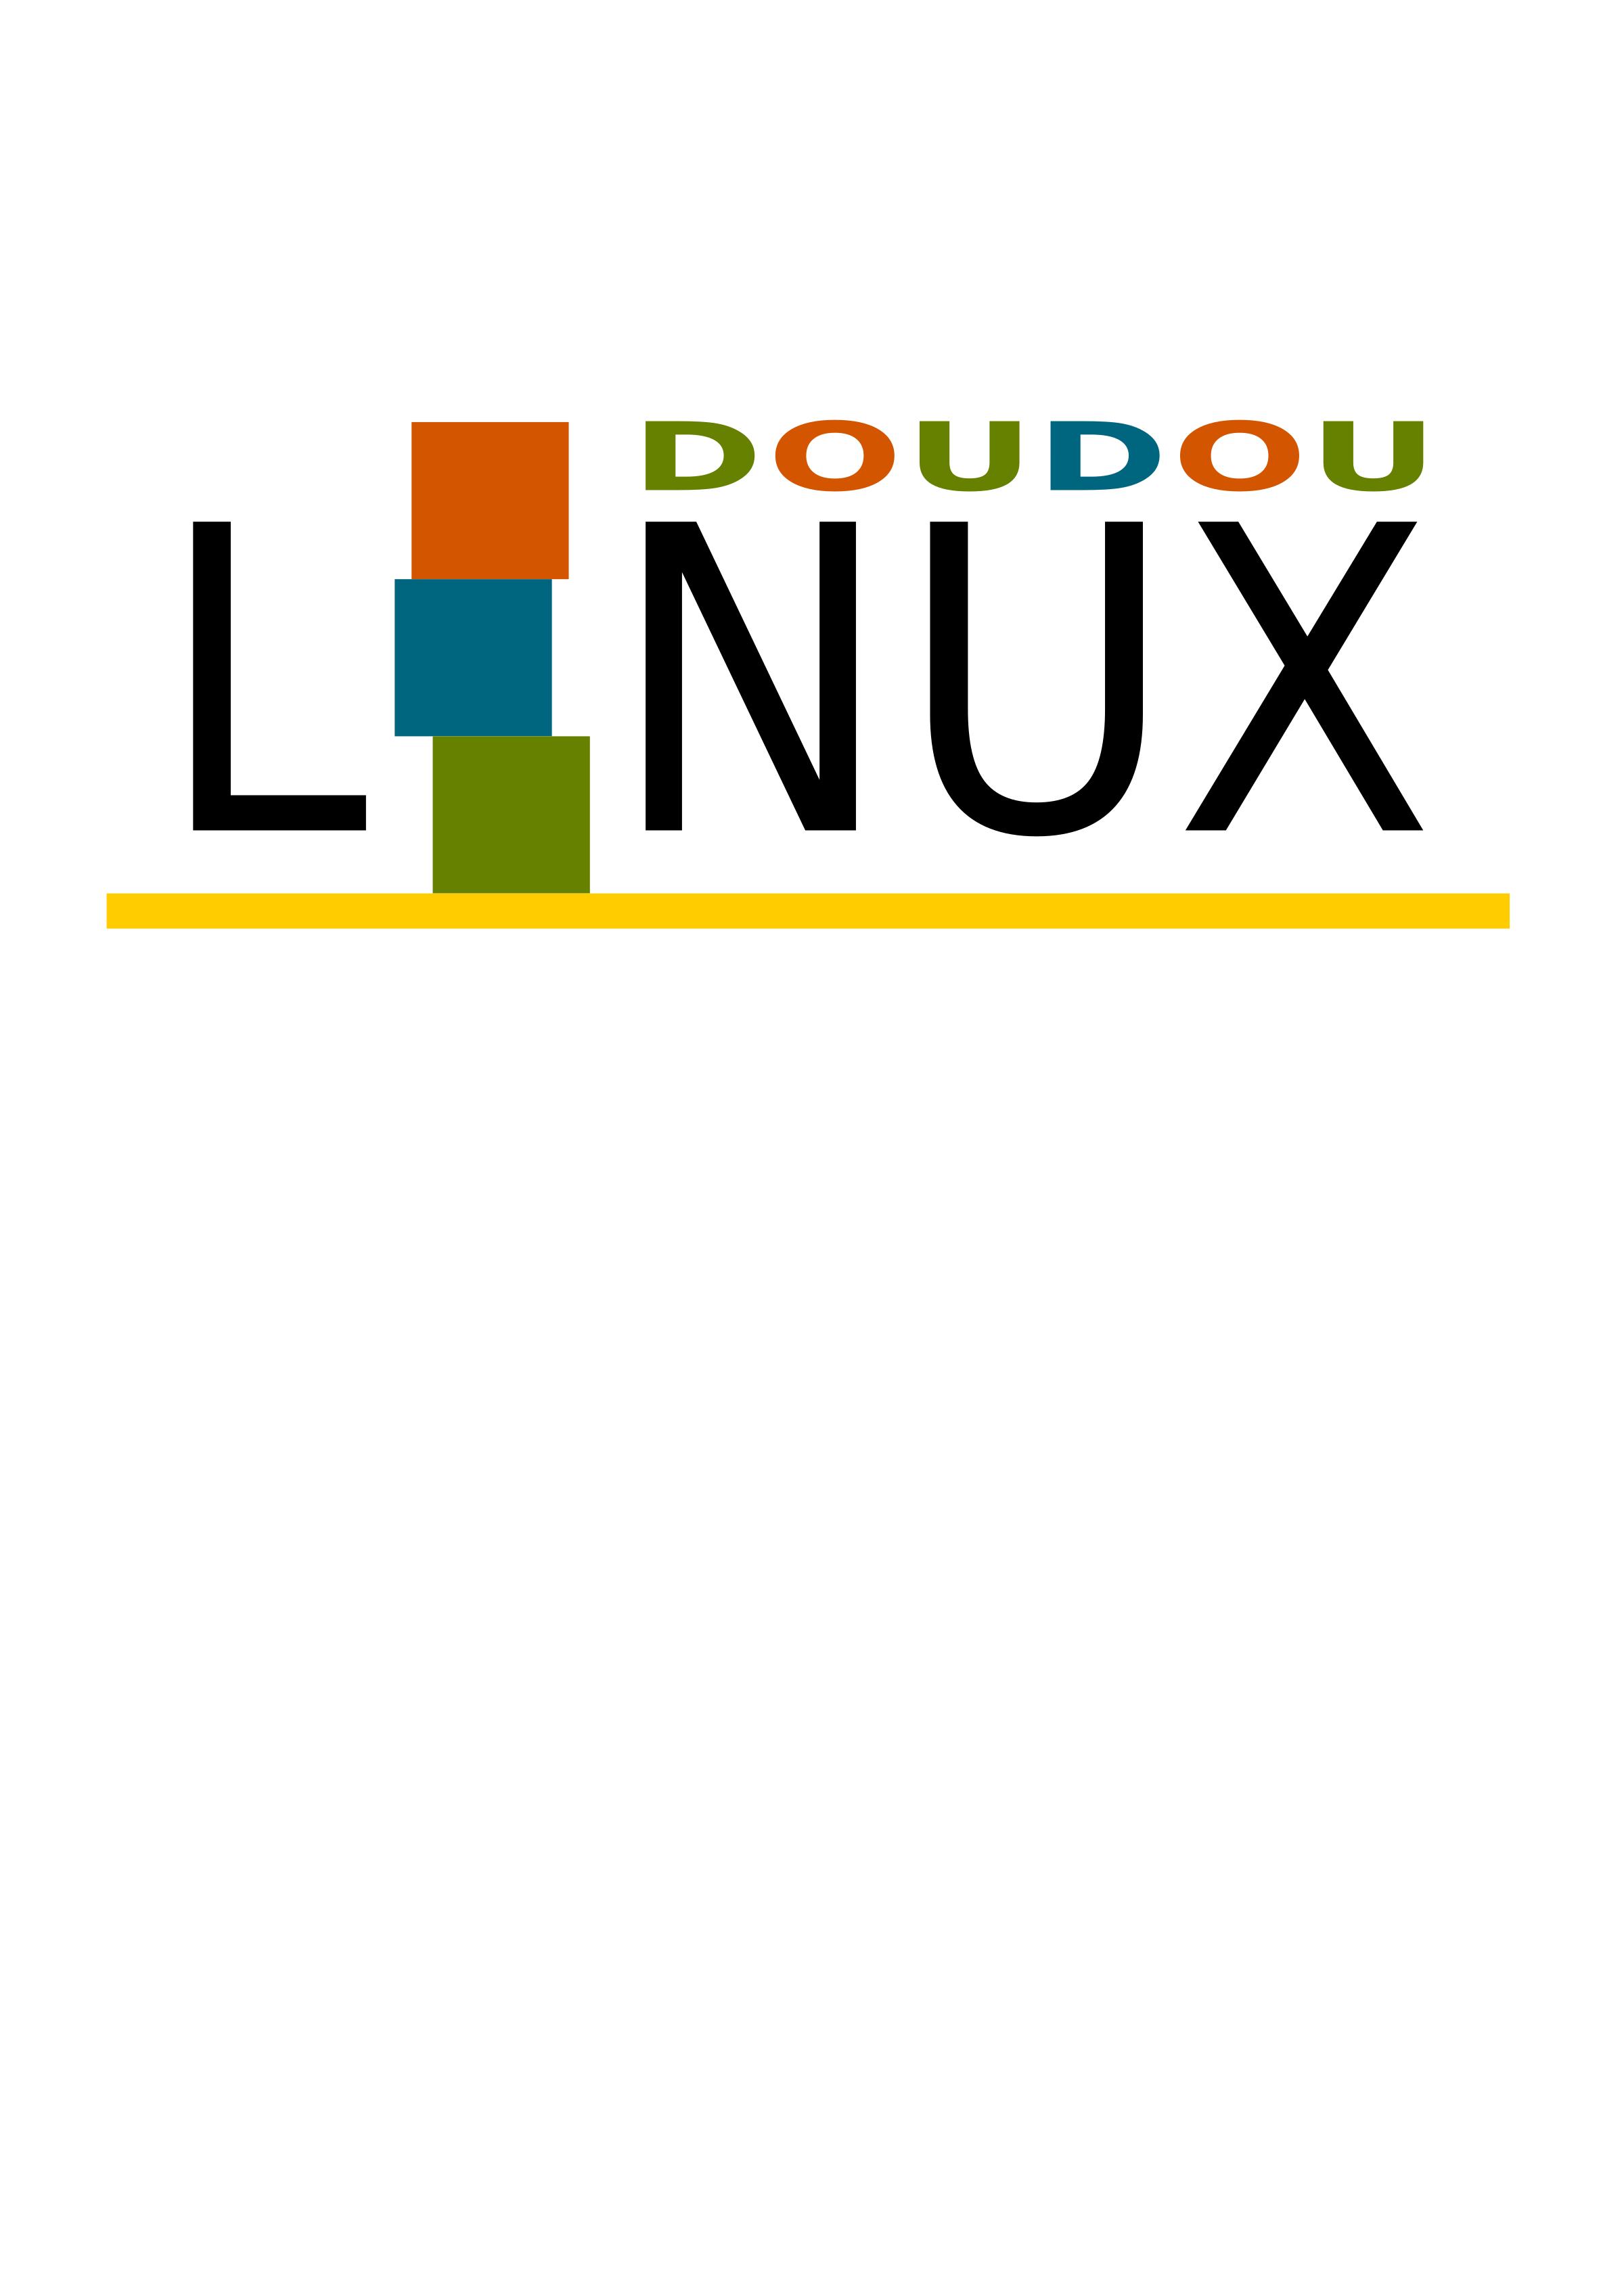 doudou linux logo proposal png